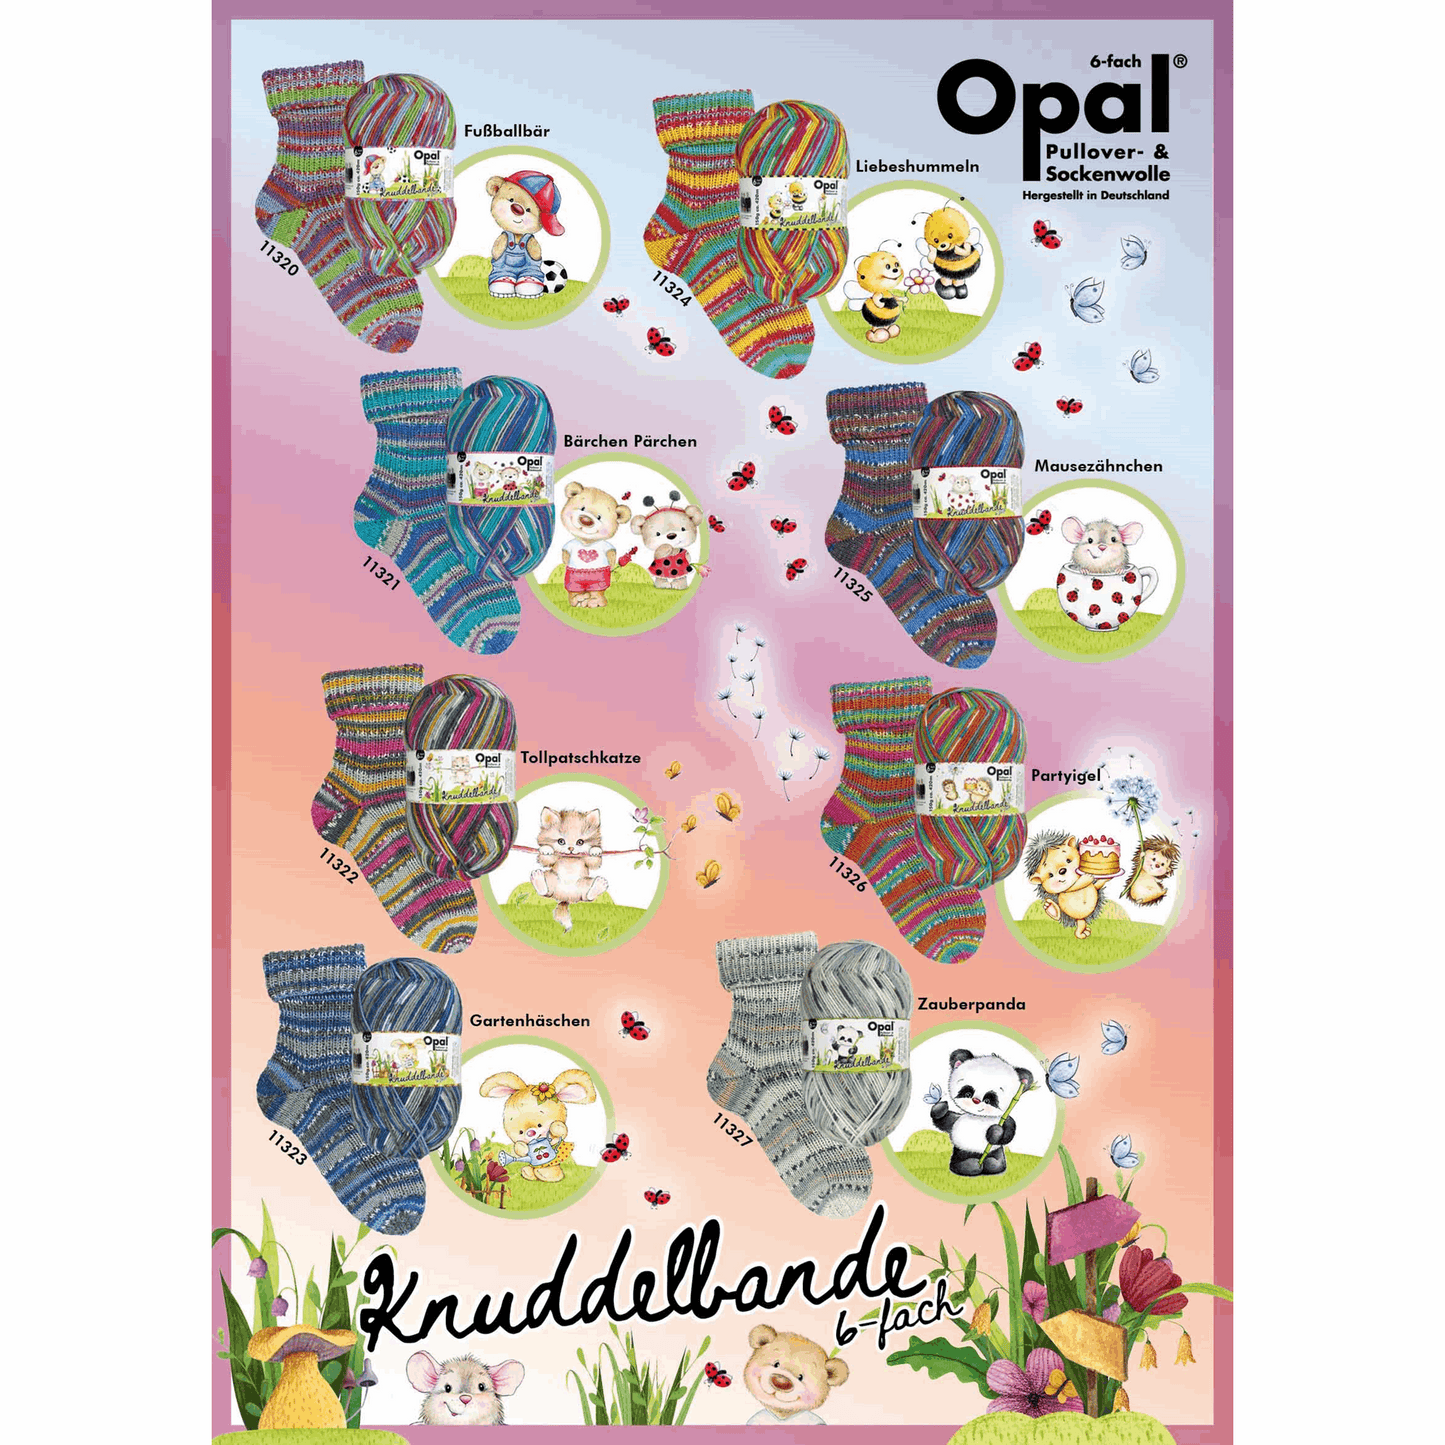 Opal cuddly ties 6-fold 150g, color magic panda 11327